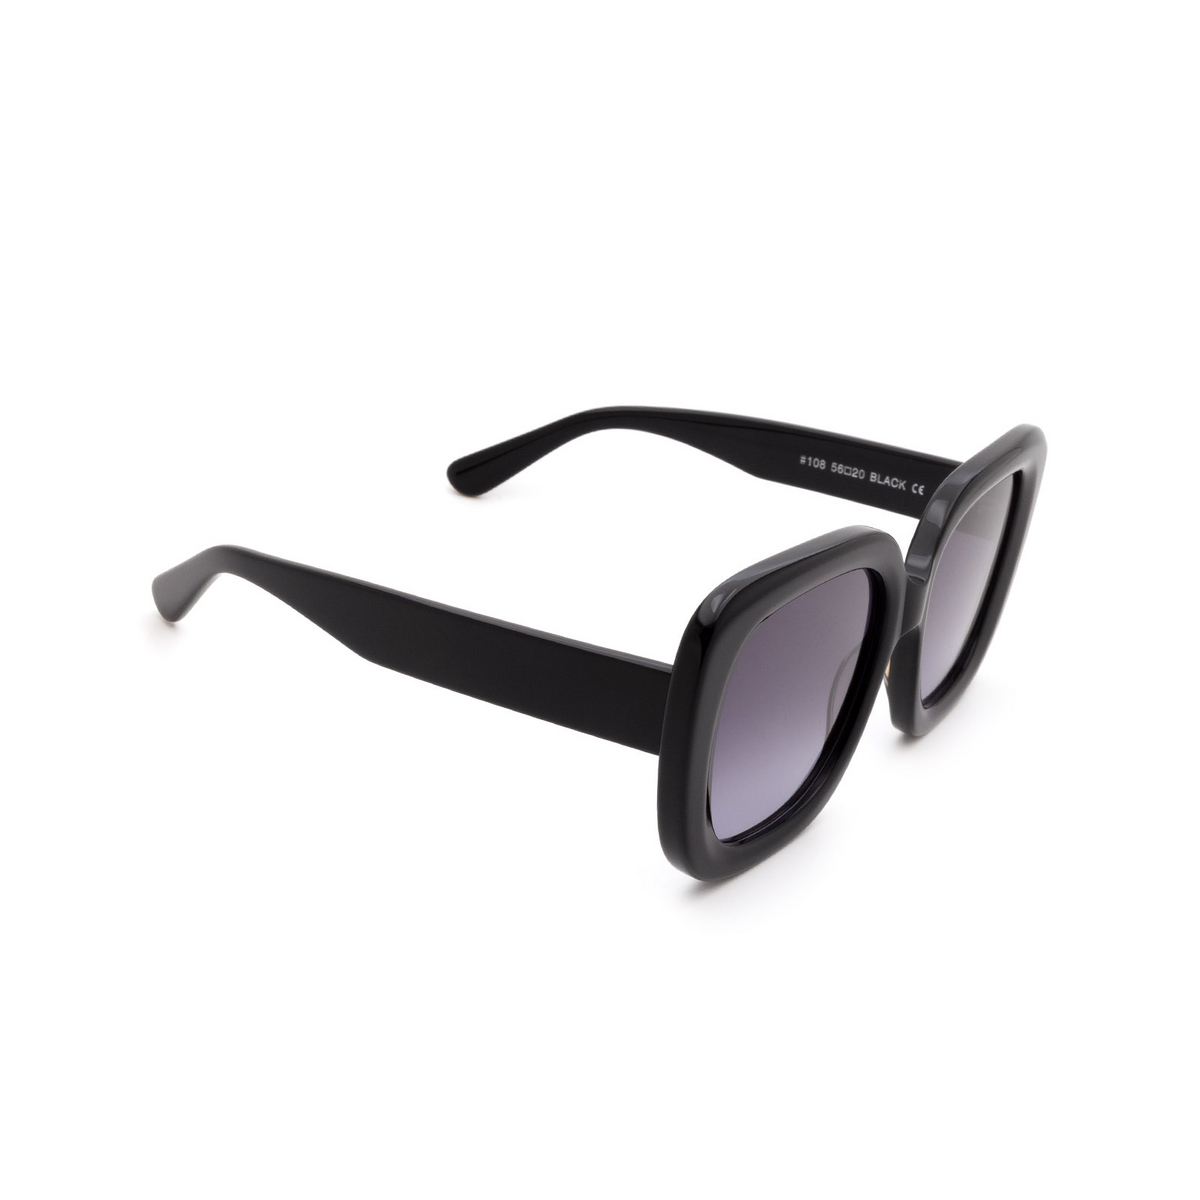 Chimi #108 Sunglasses Black - three-quarters view